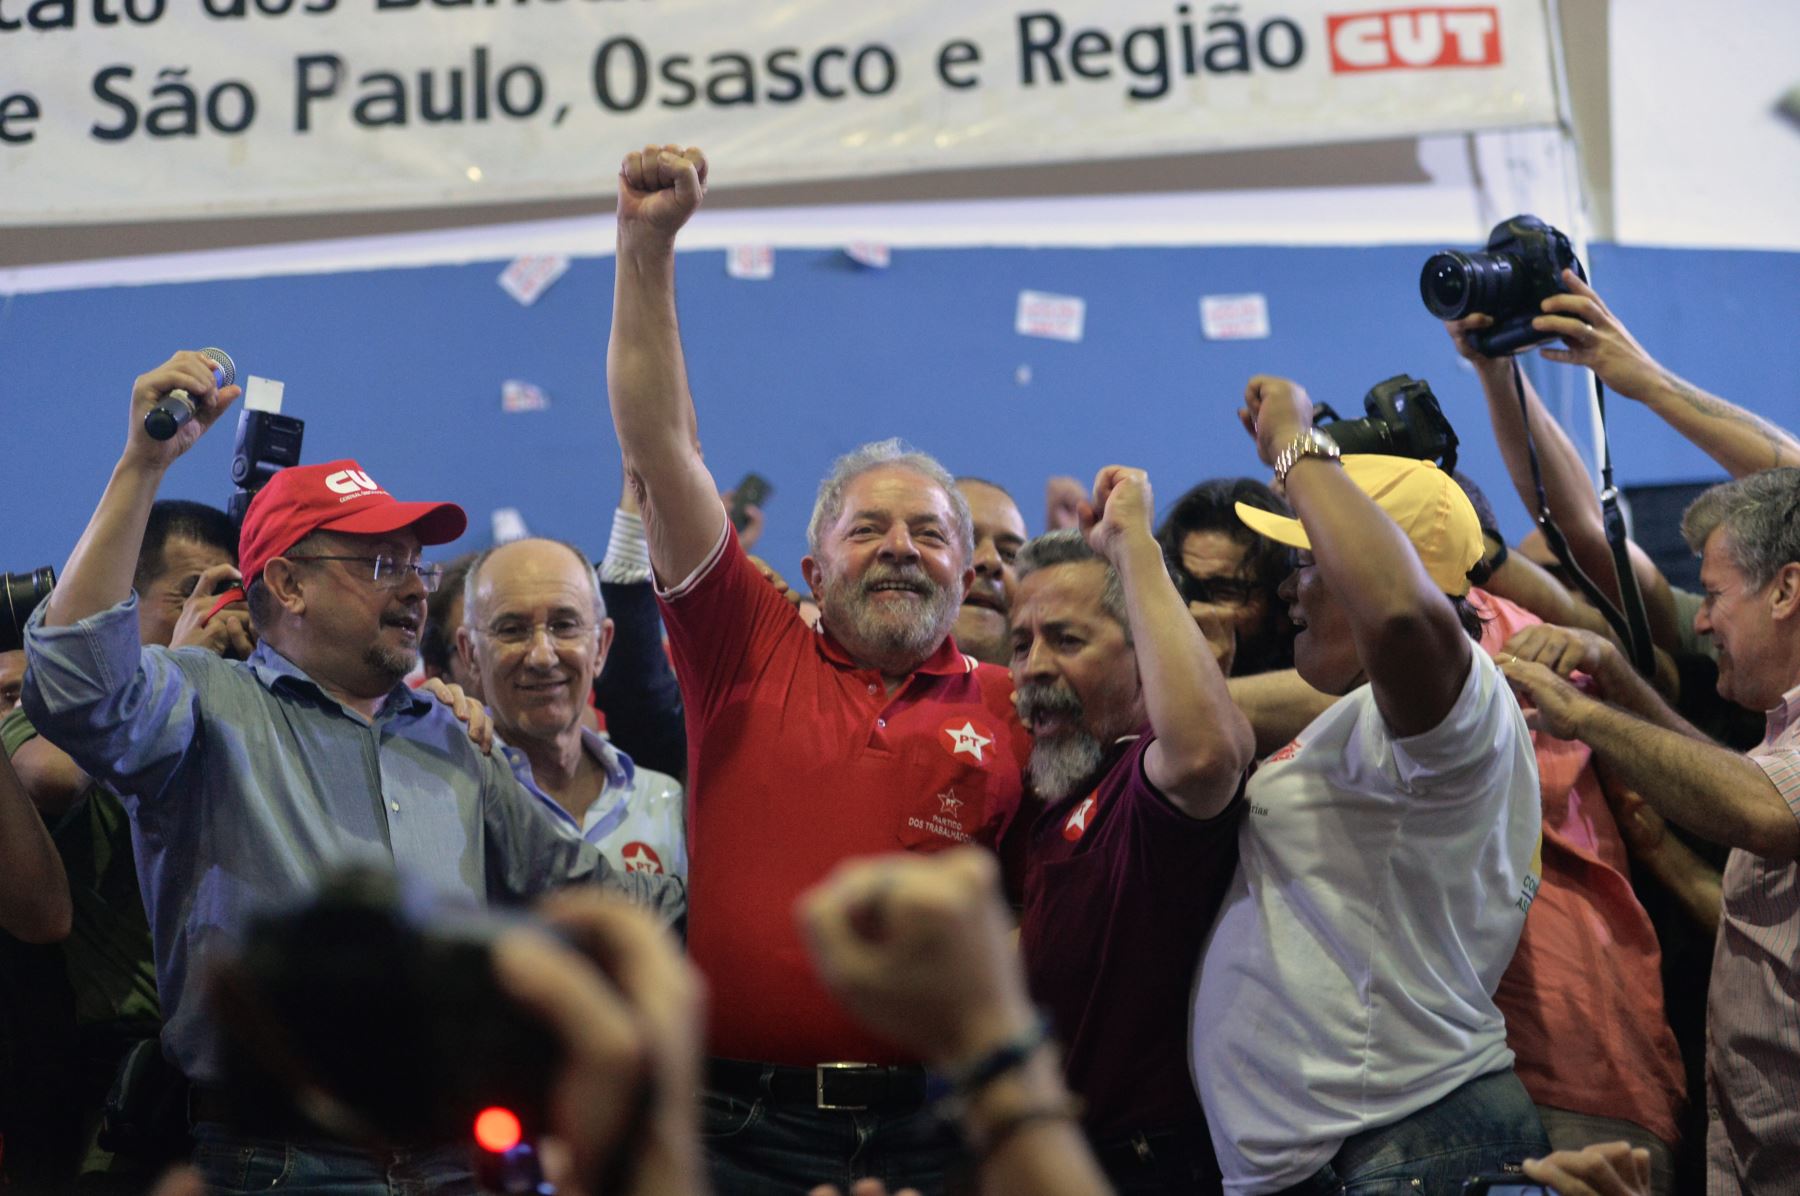 Red internacional de comunicadores condena persecución judicial contra Lula